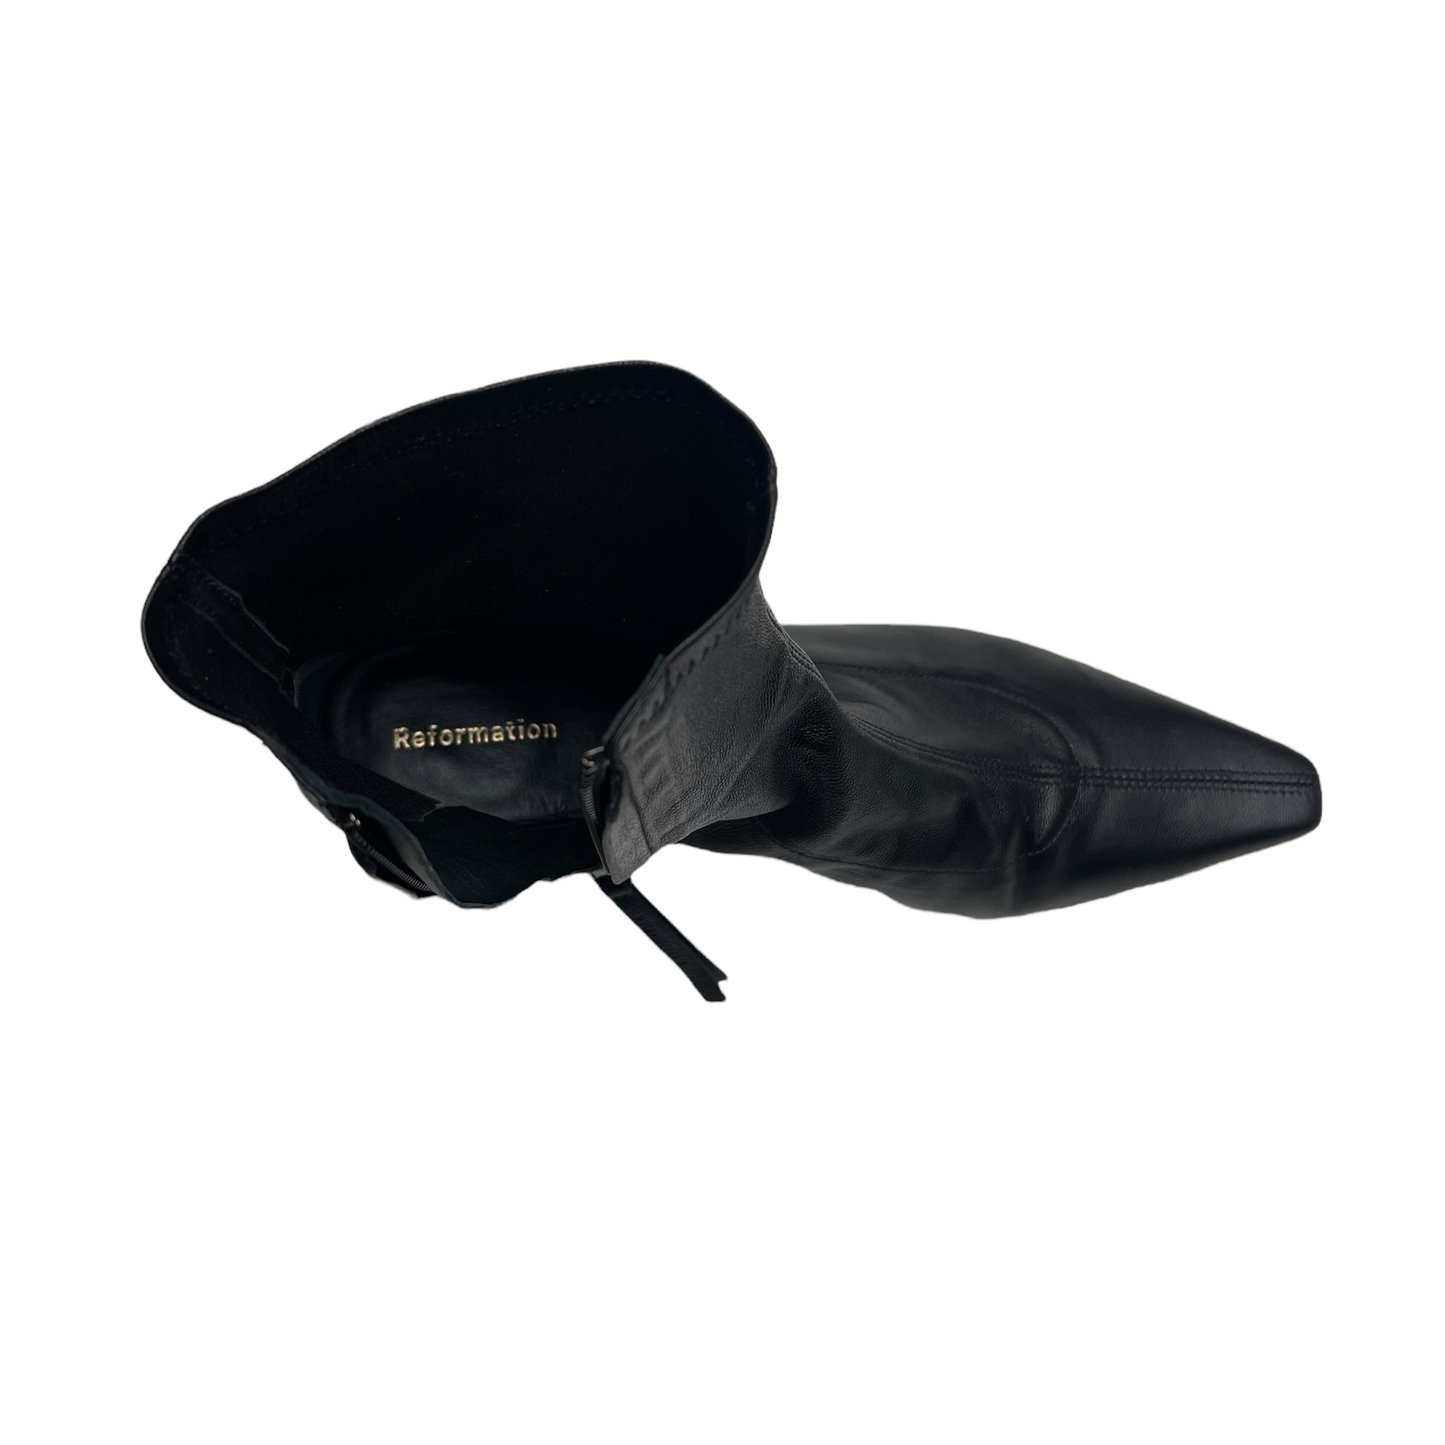 Black Kitten Heel Boots - 7.5